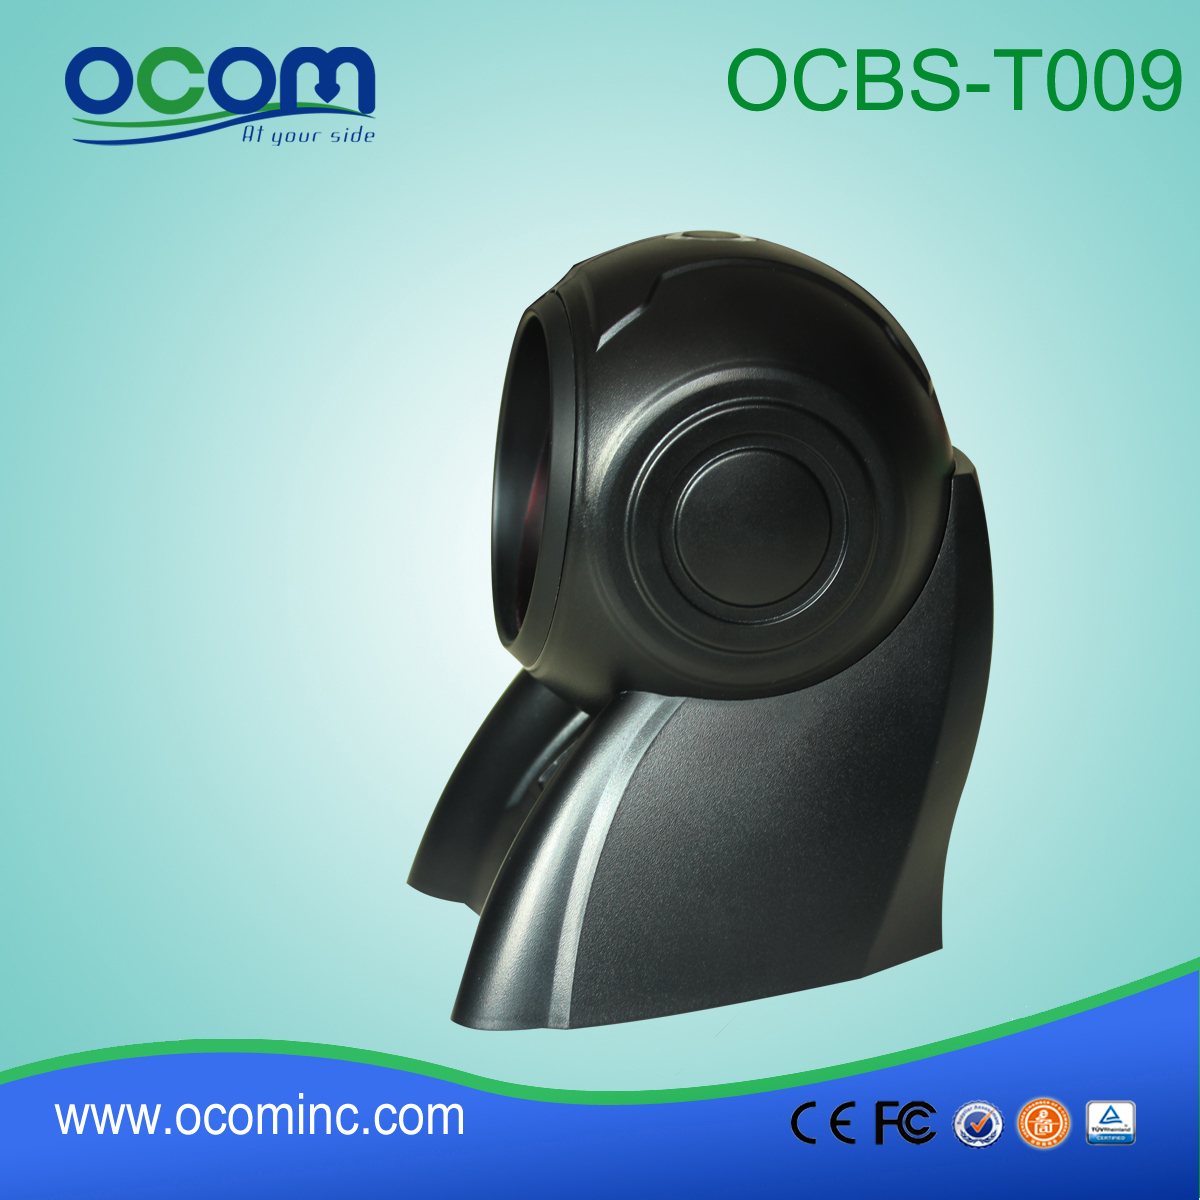 OCBS-T009-سطح المكتب متعددة الاتجاهات الماسح الضوئي الباركود السيارات